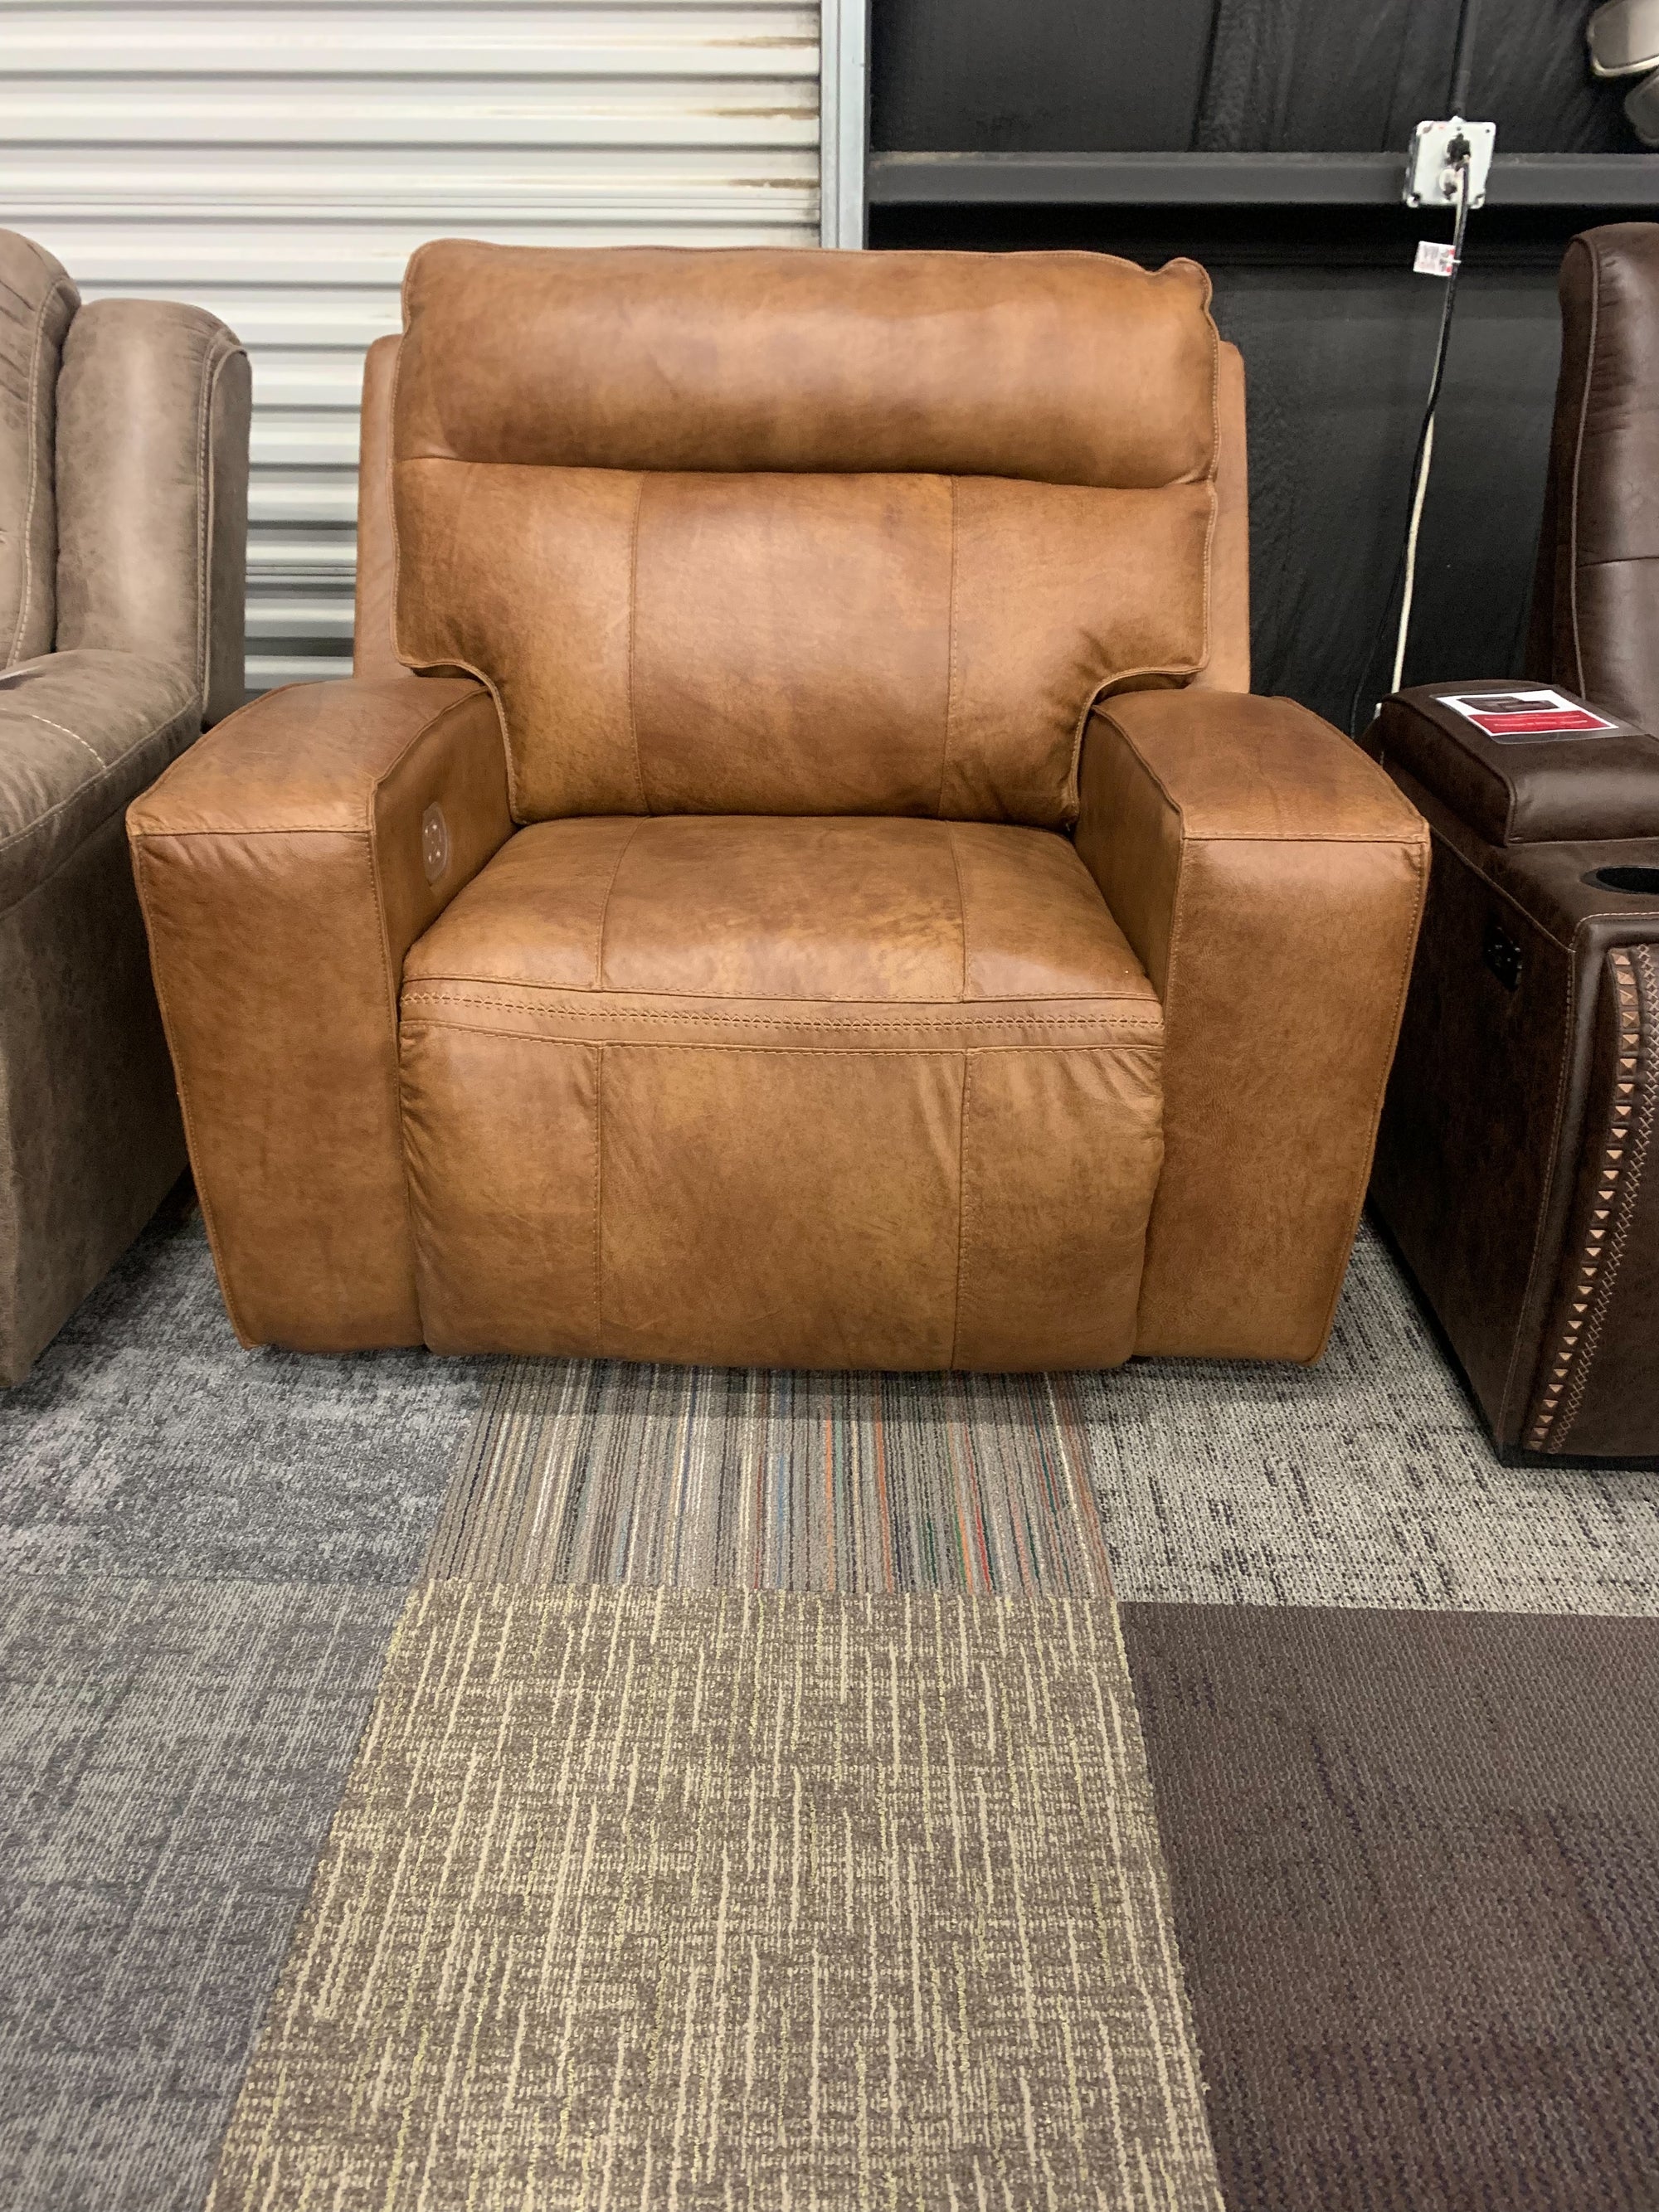 U263 FI-A Leather Powered Recline Sofa and Loveseat